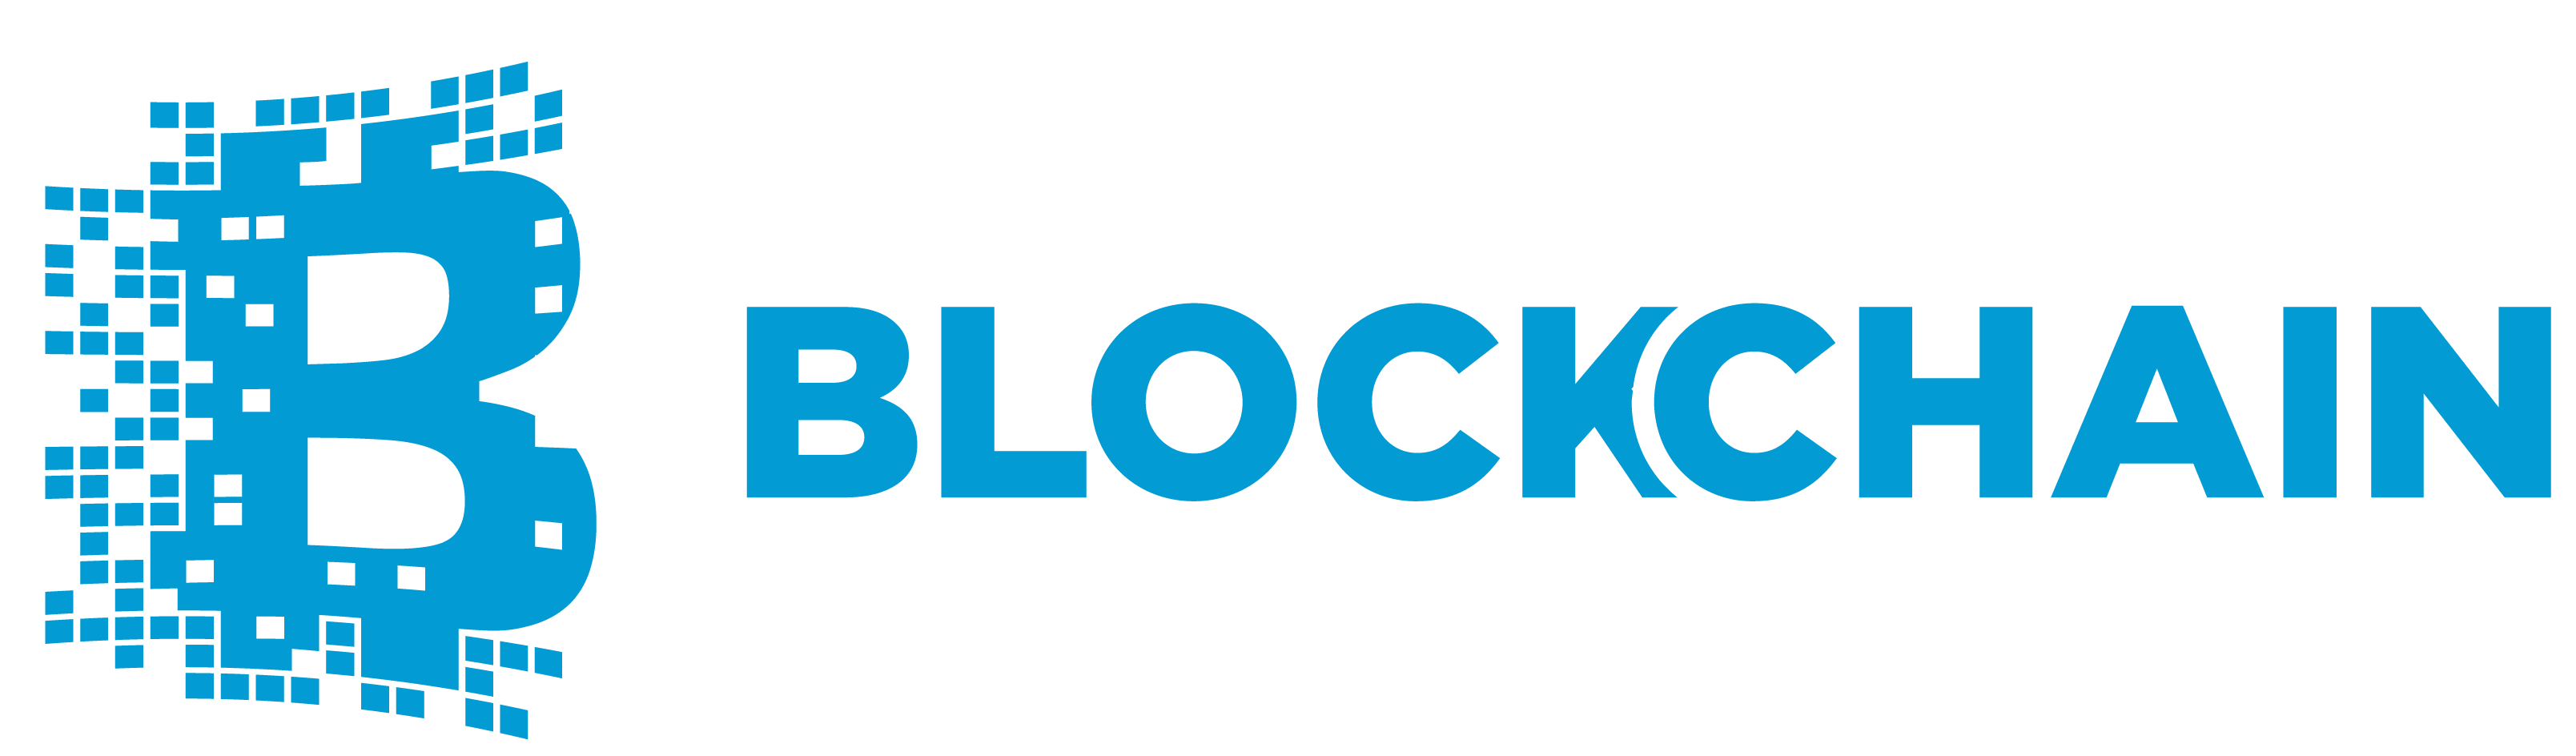 Blockchain Wallet - Review + Registration Instructions